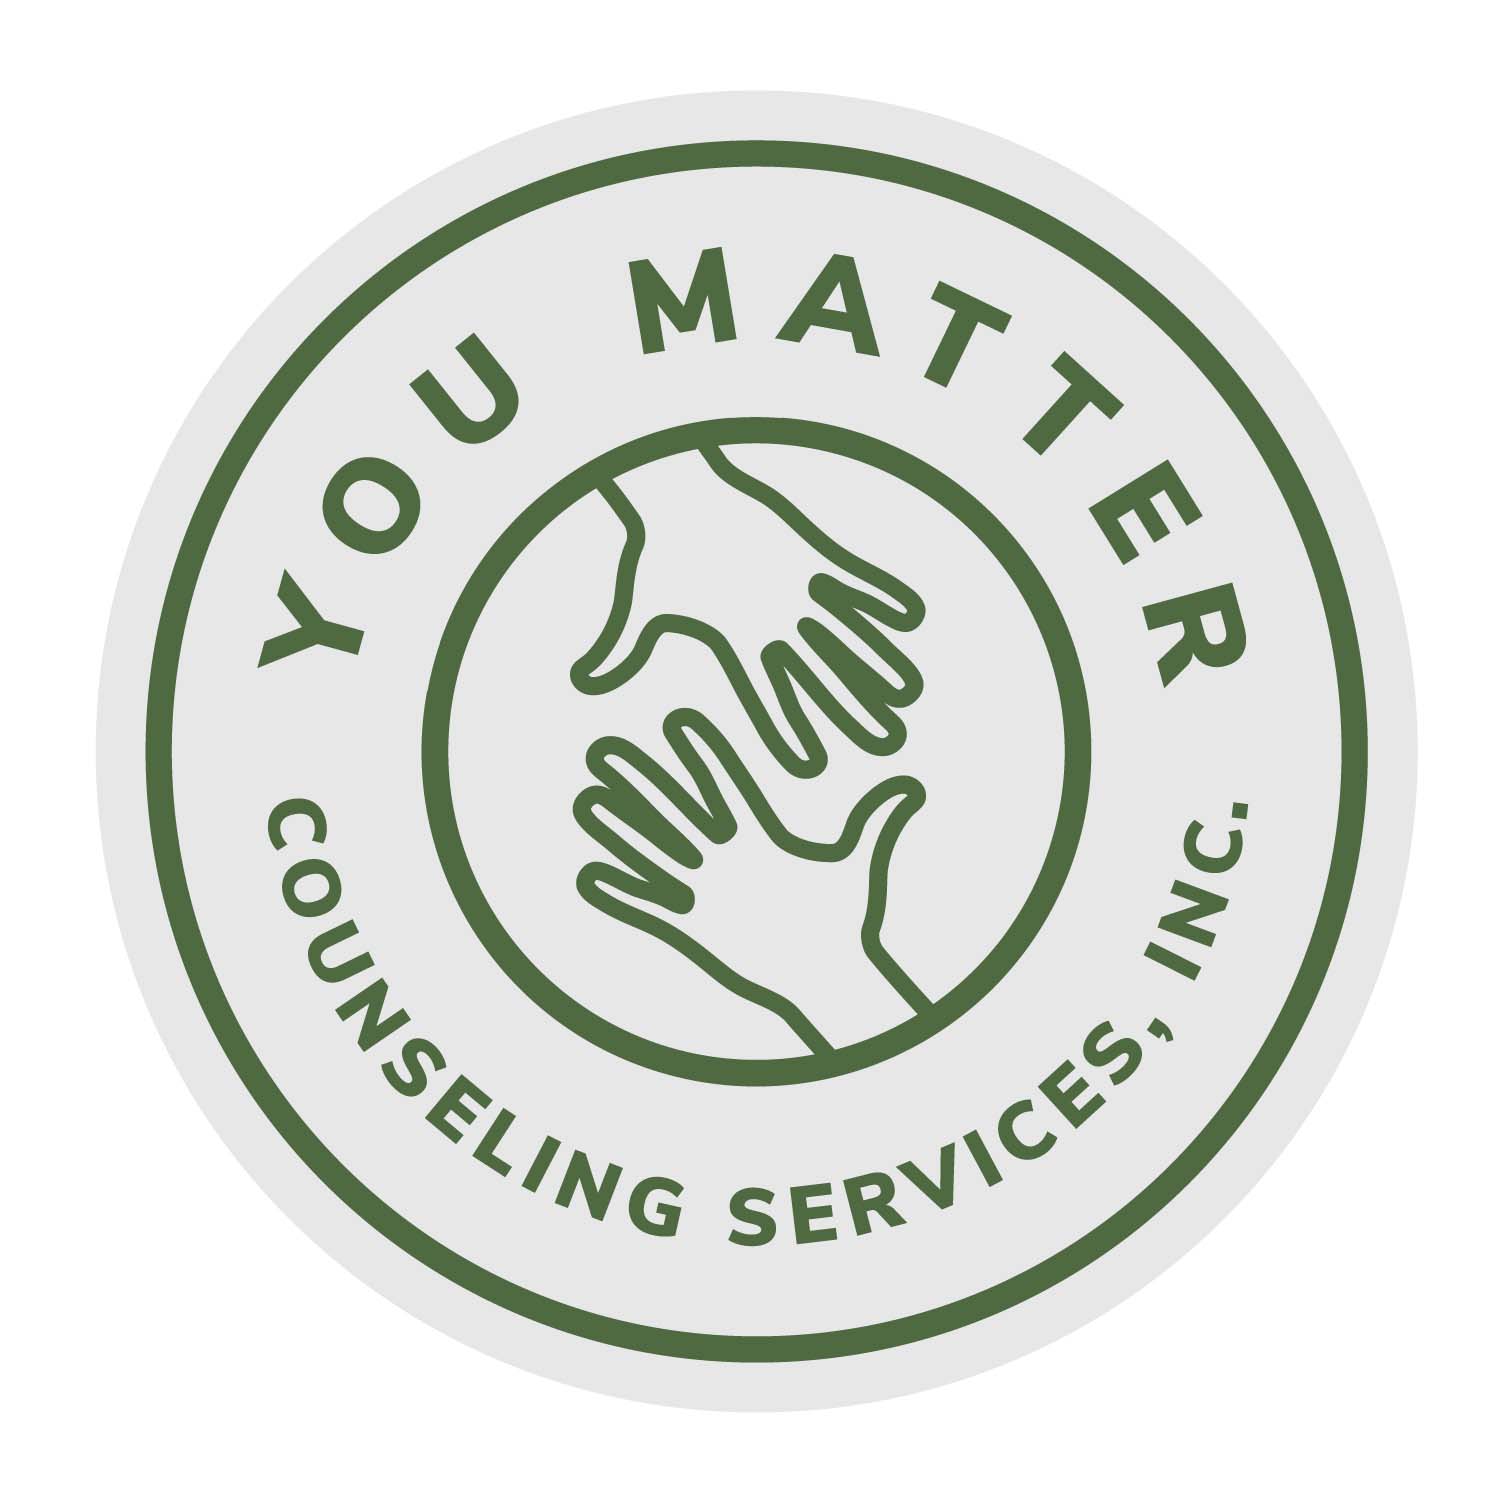 You Matter Counseling